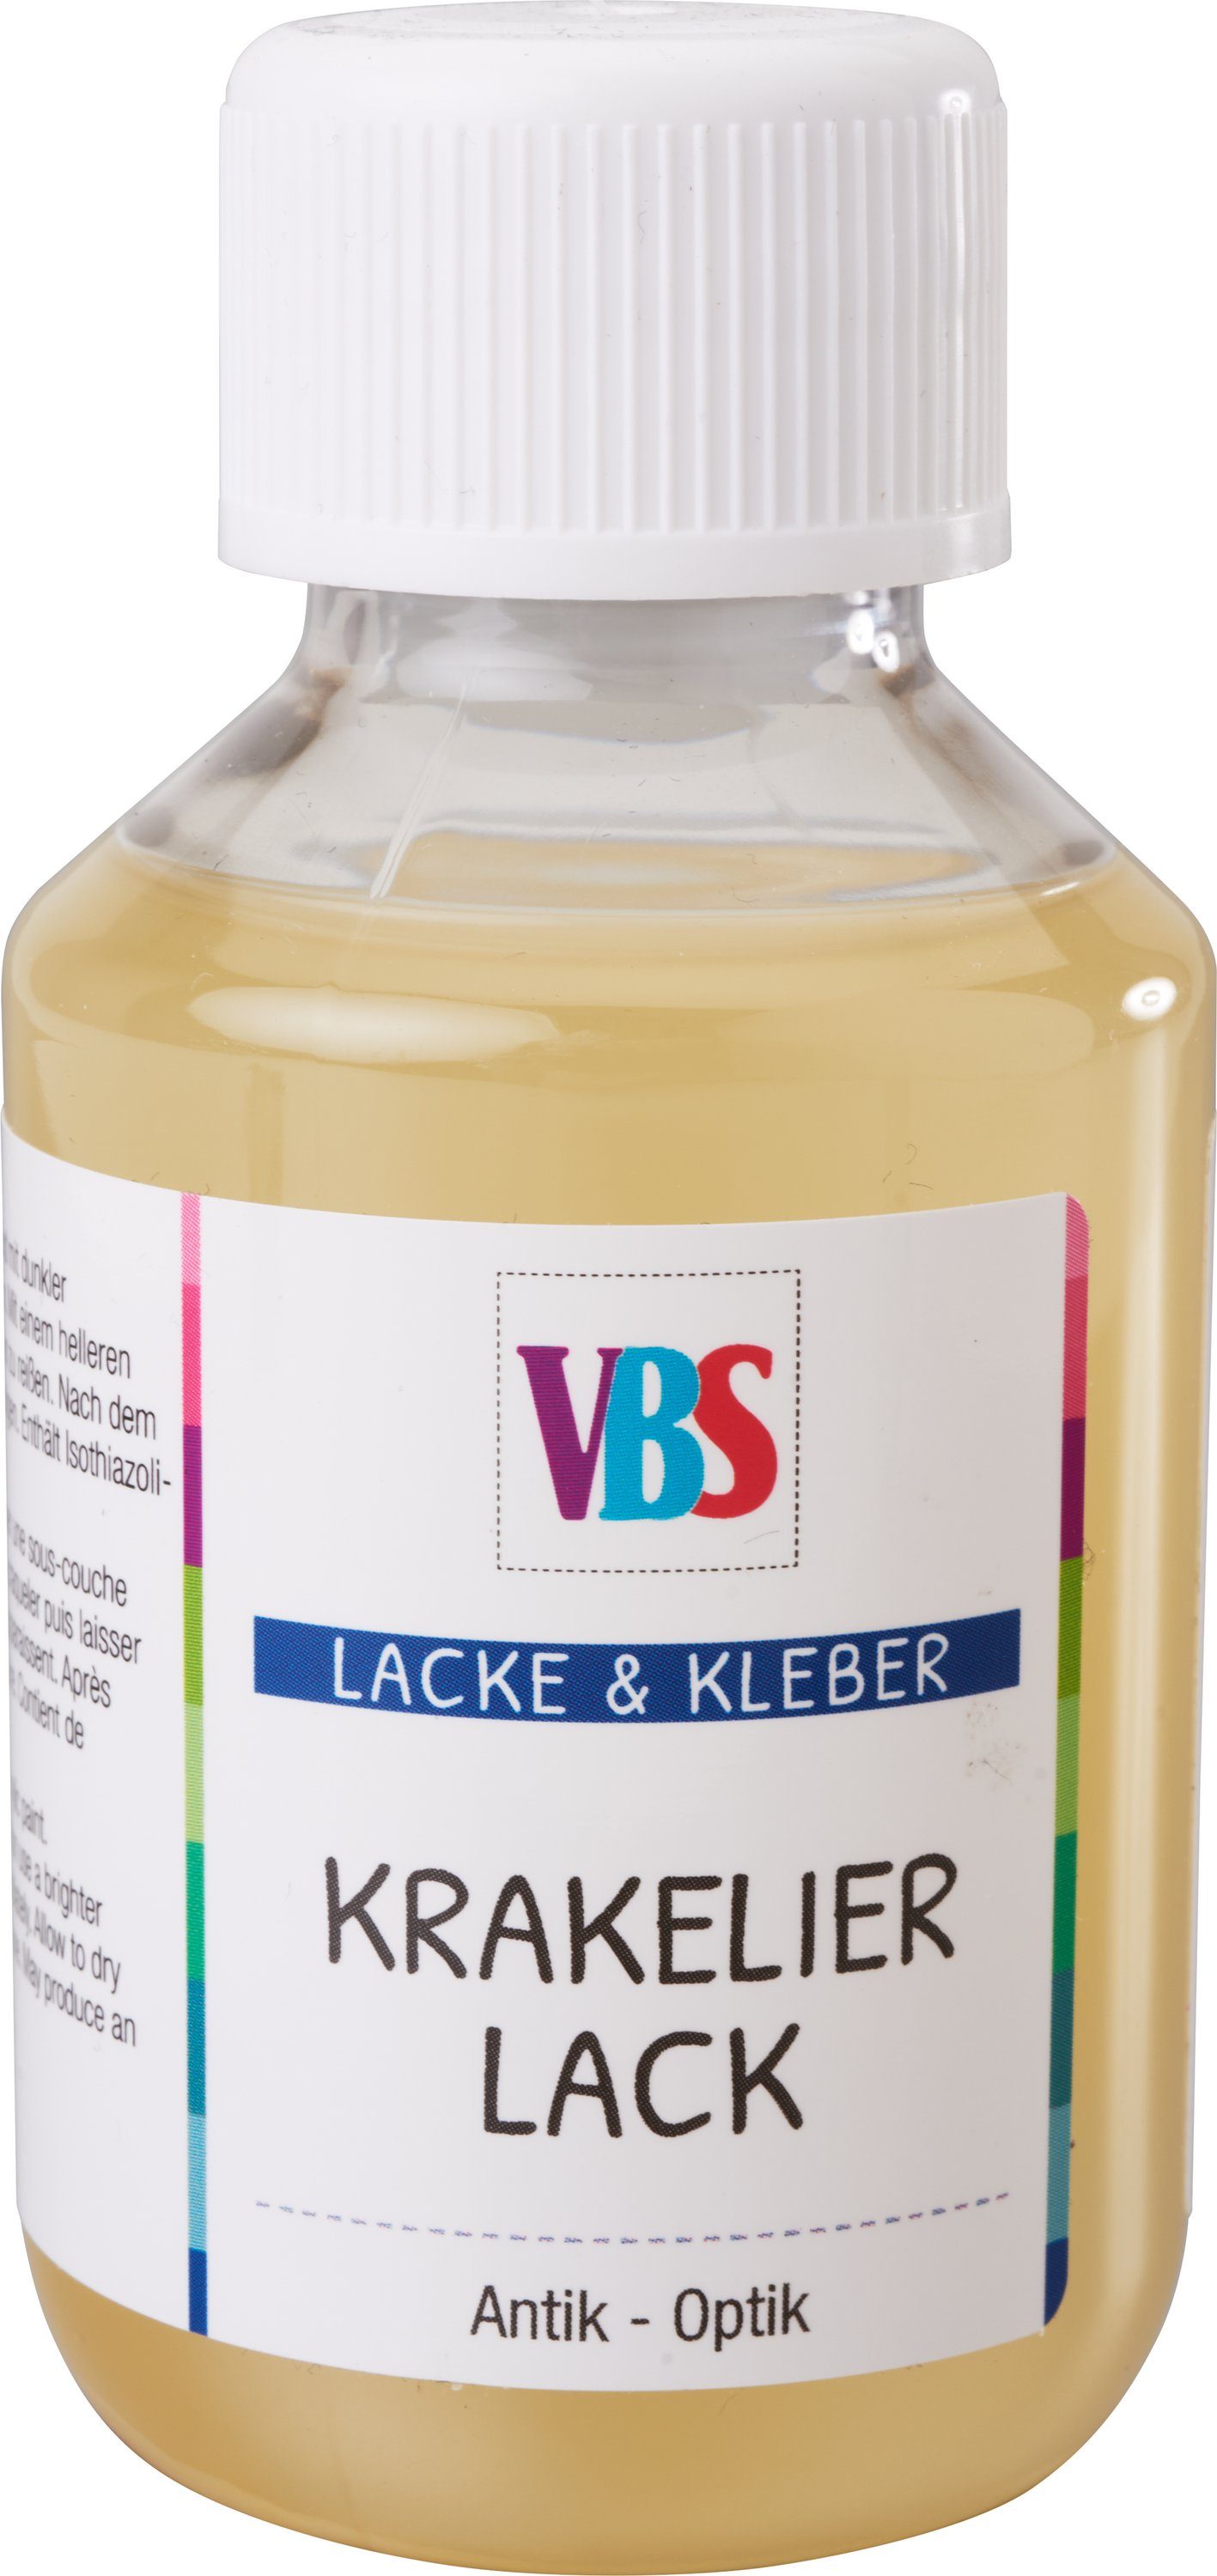 VBS Lack Krakelier-Lack, hochpigmentiert